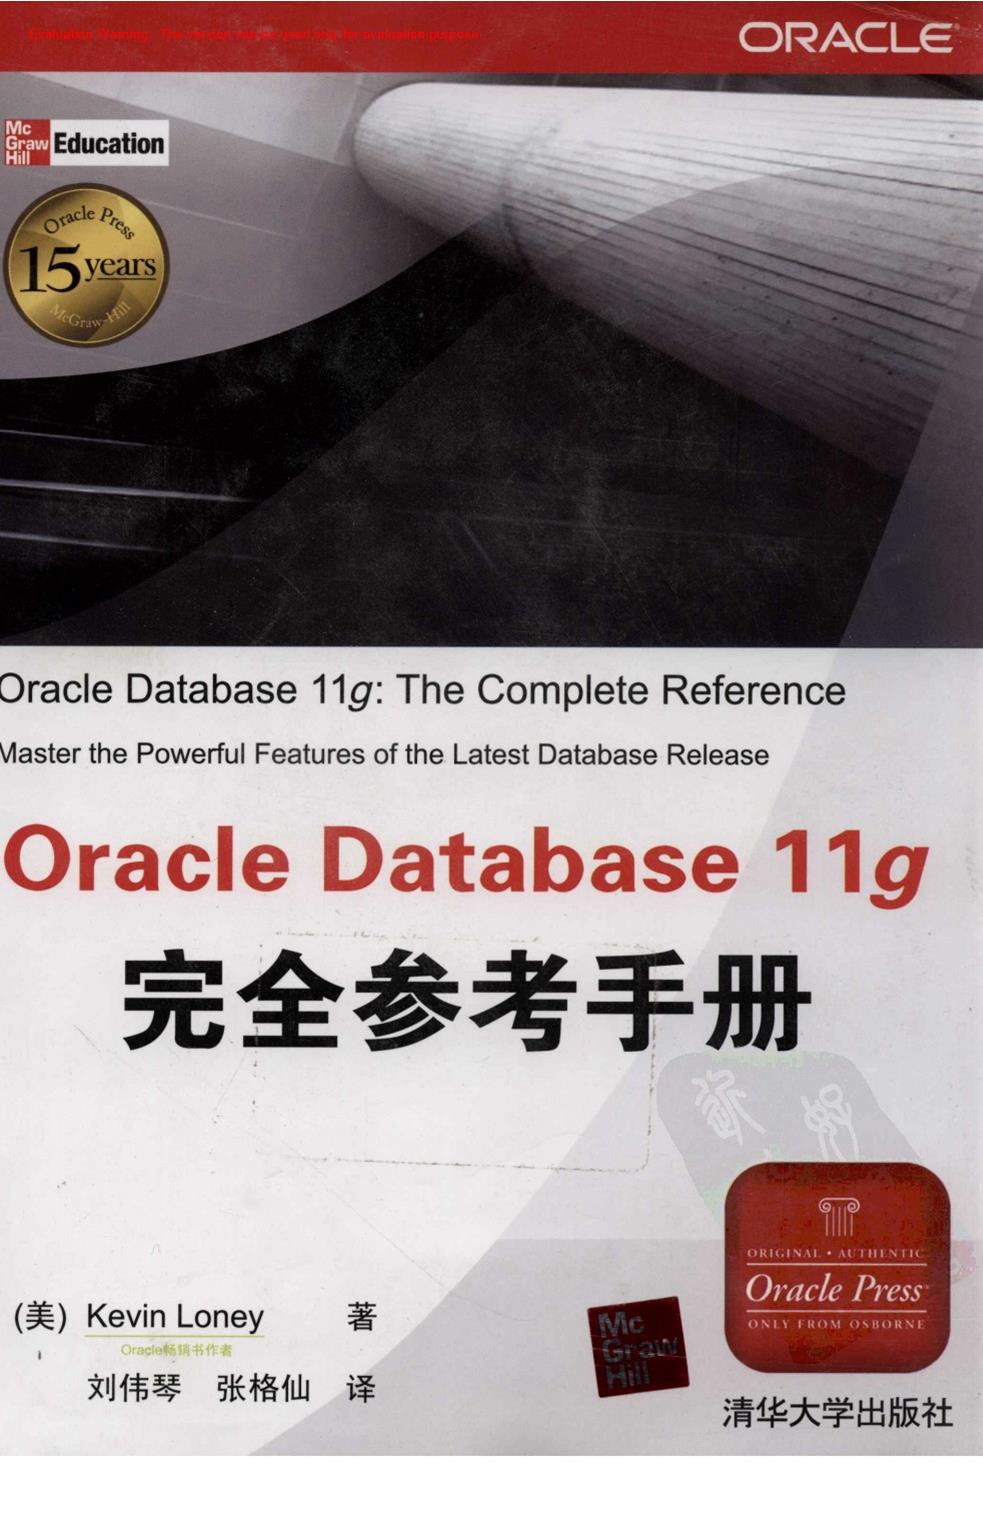 《Oracle Database11g完全参考手册_Kevin Loney著_刘伟琴译_共1220页》